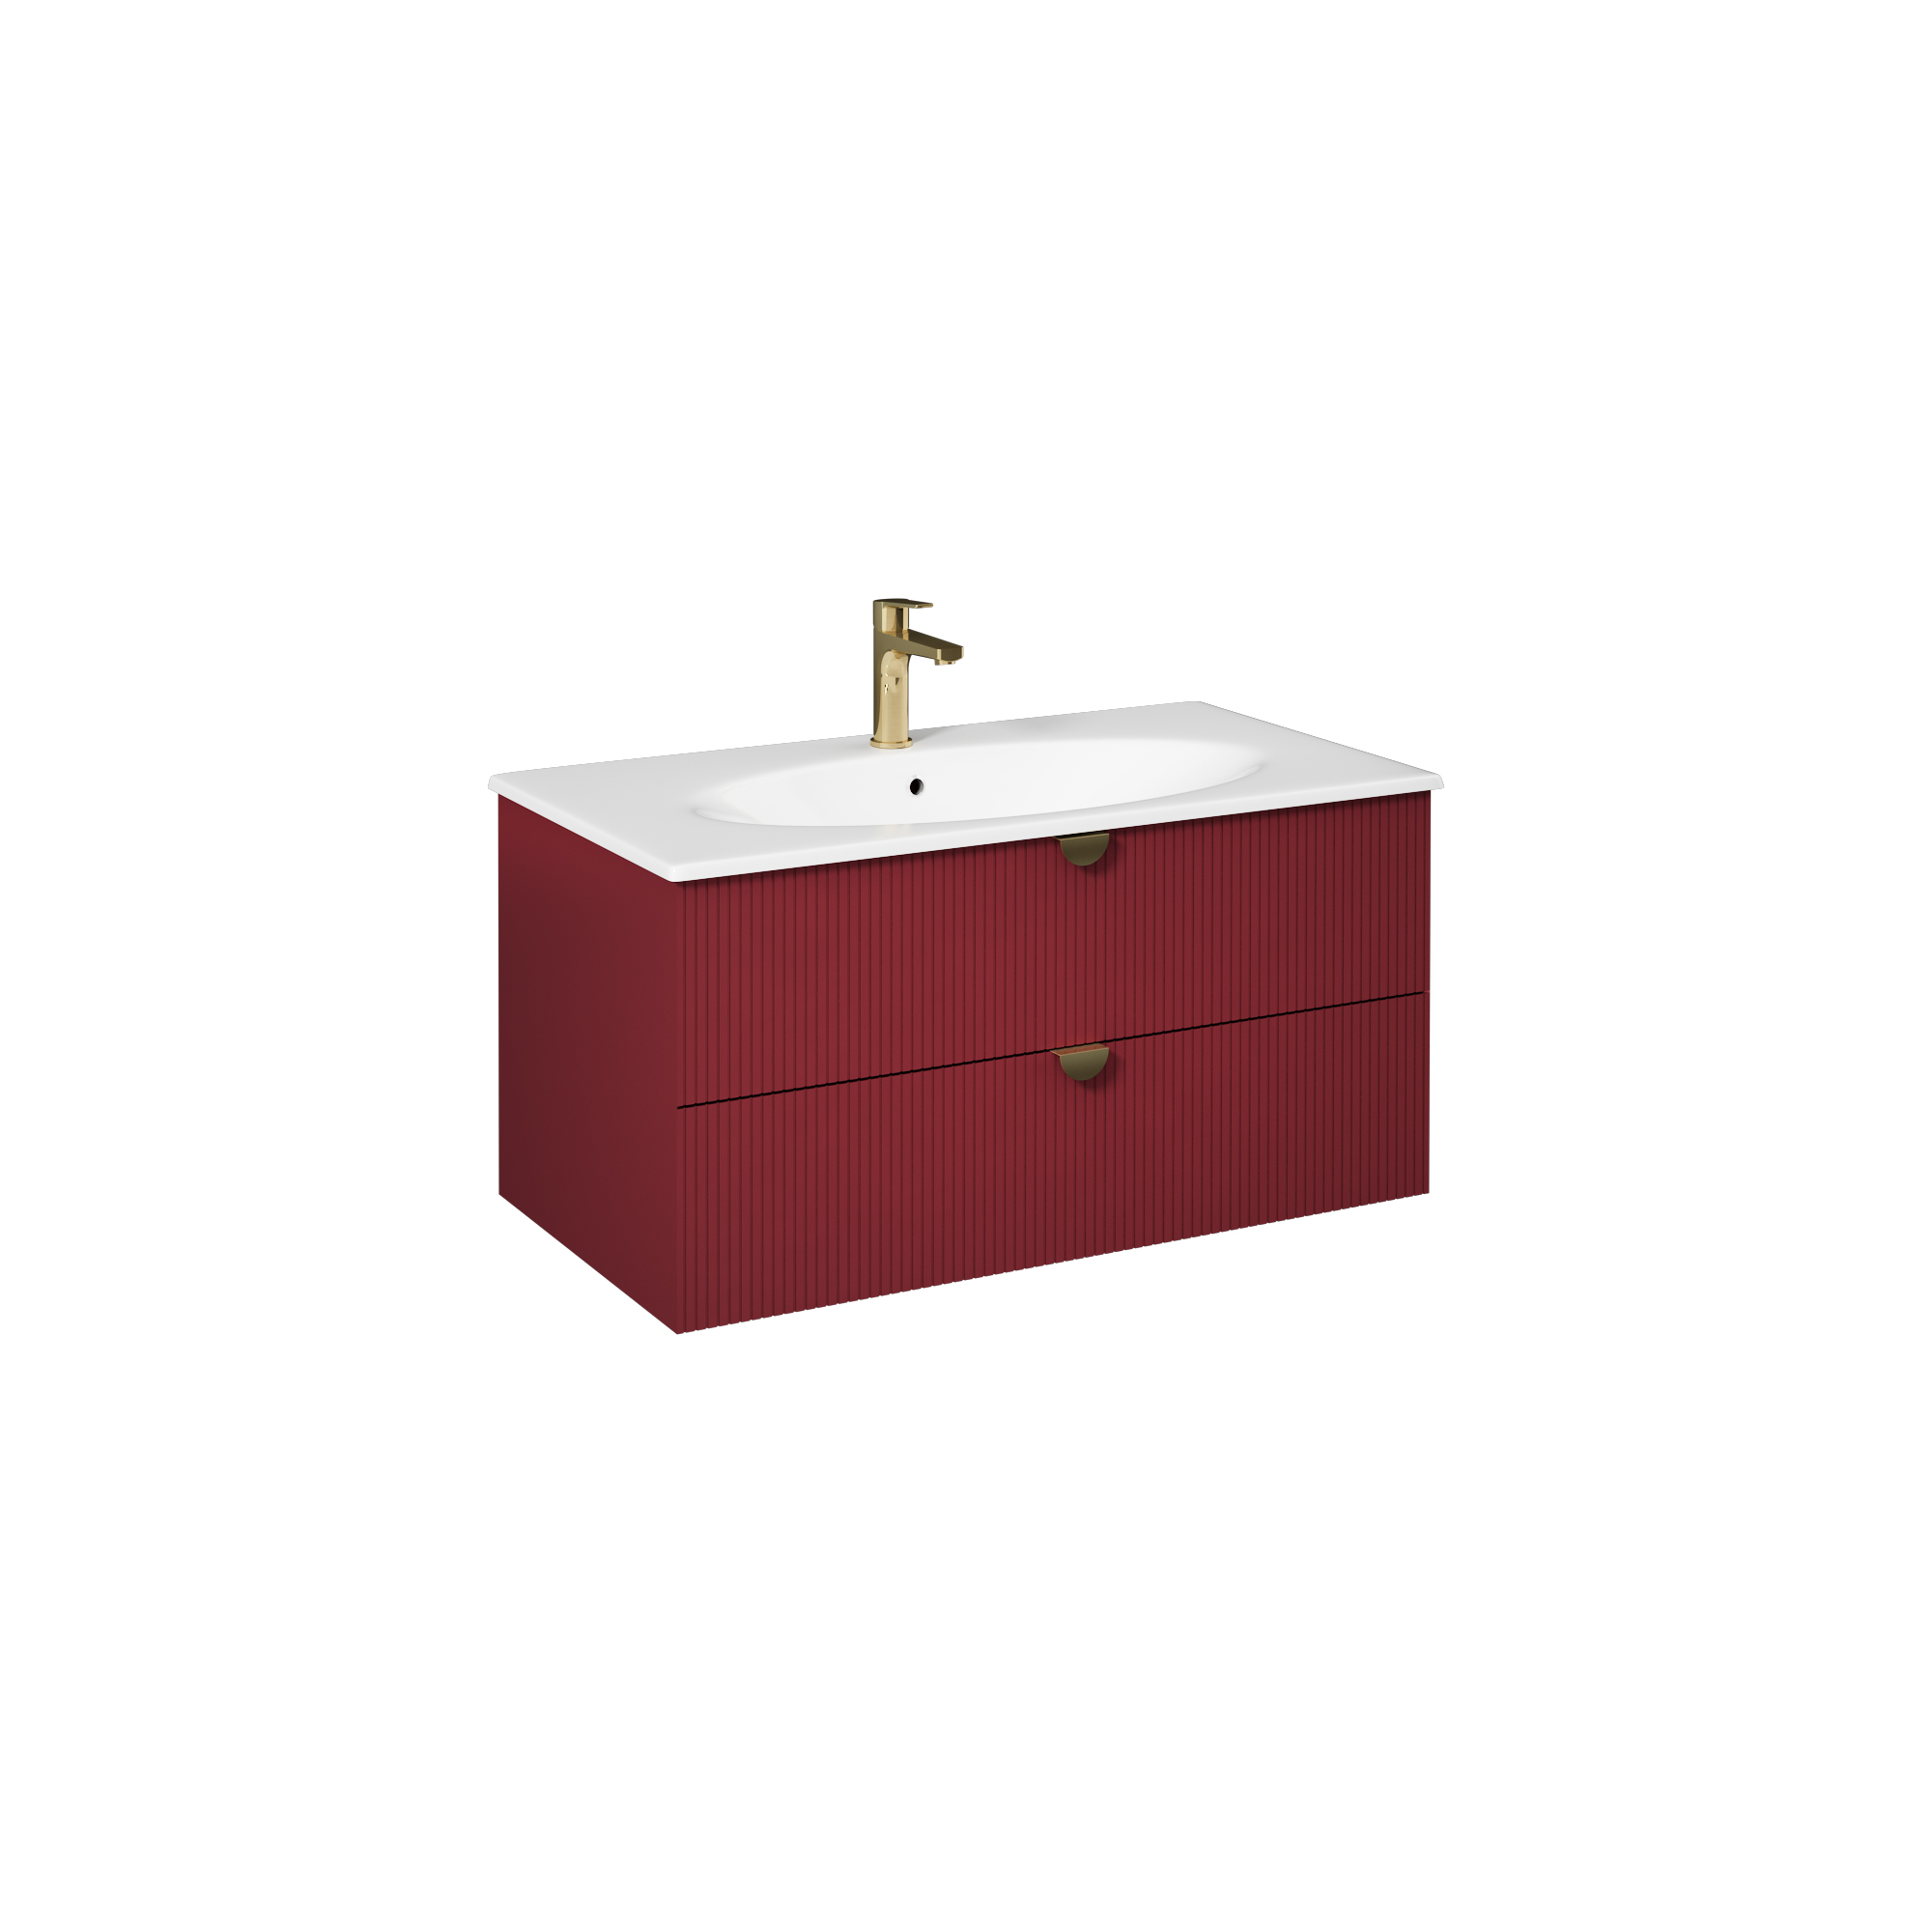 Infinity Washbasin Cabinet, Ruby Red, with White Washbasin 130 cm